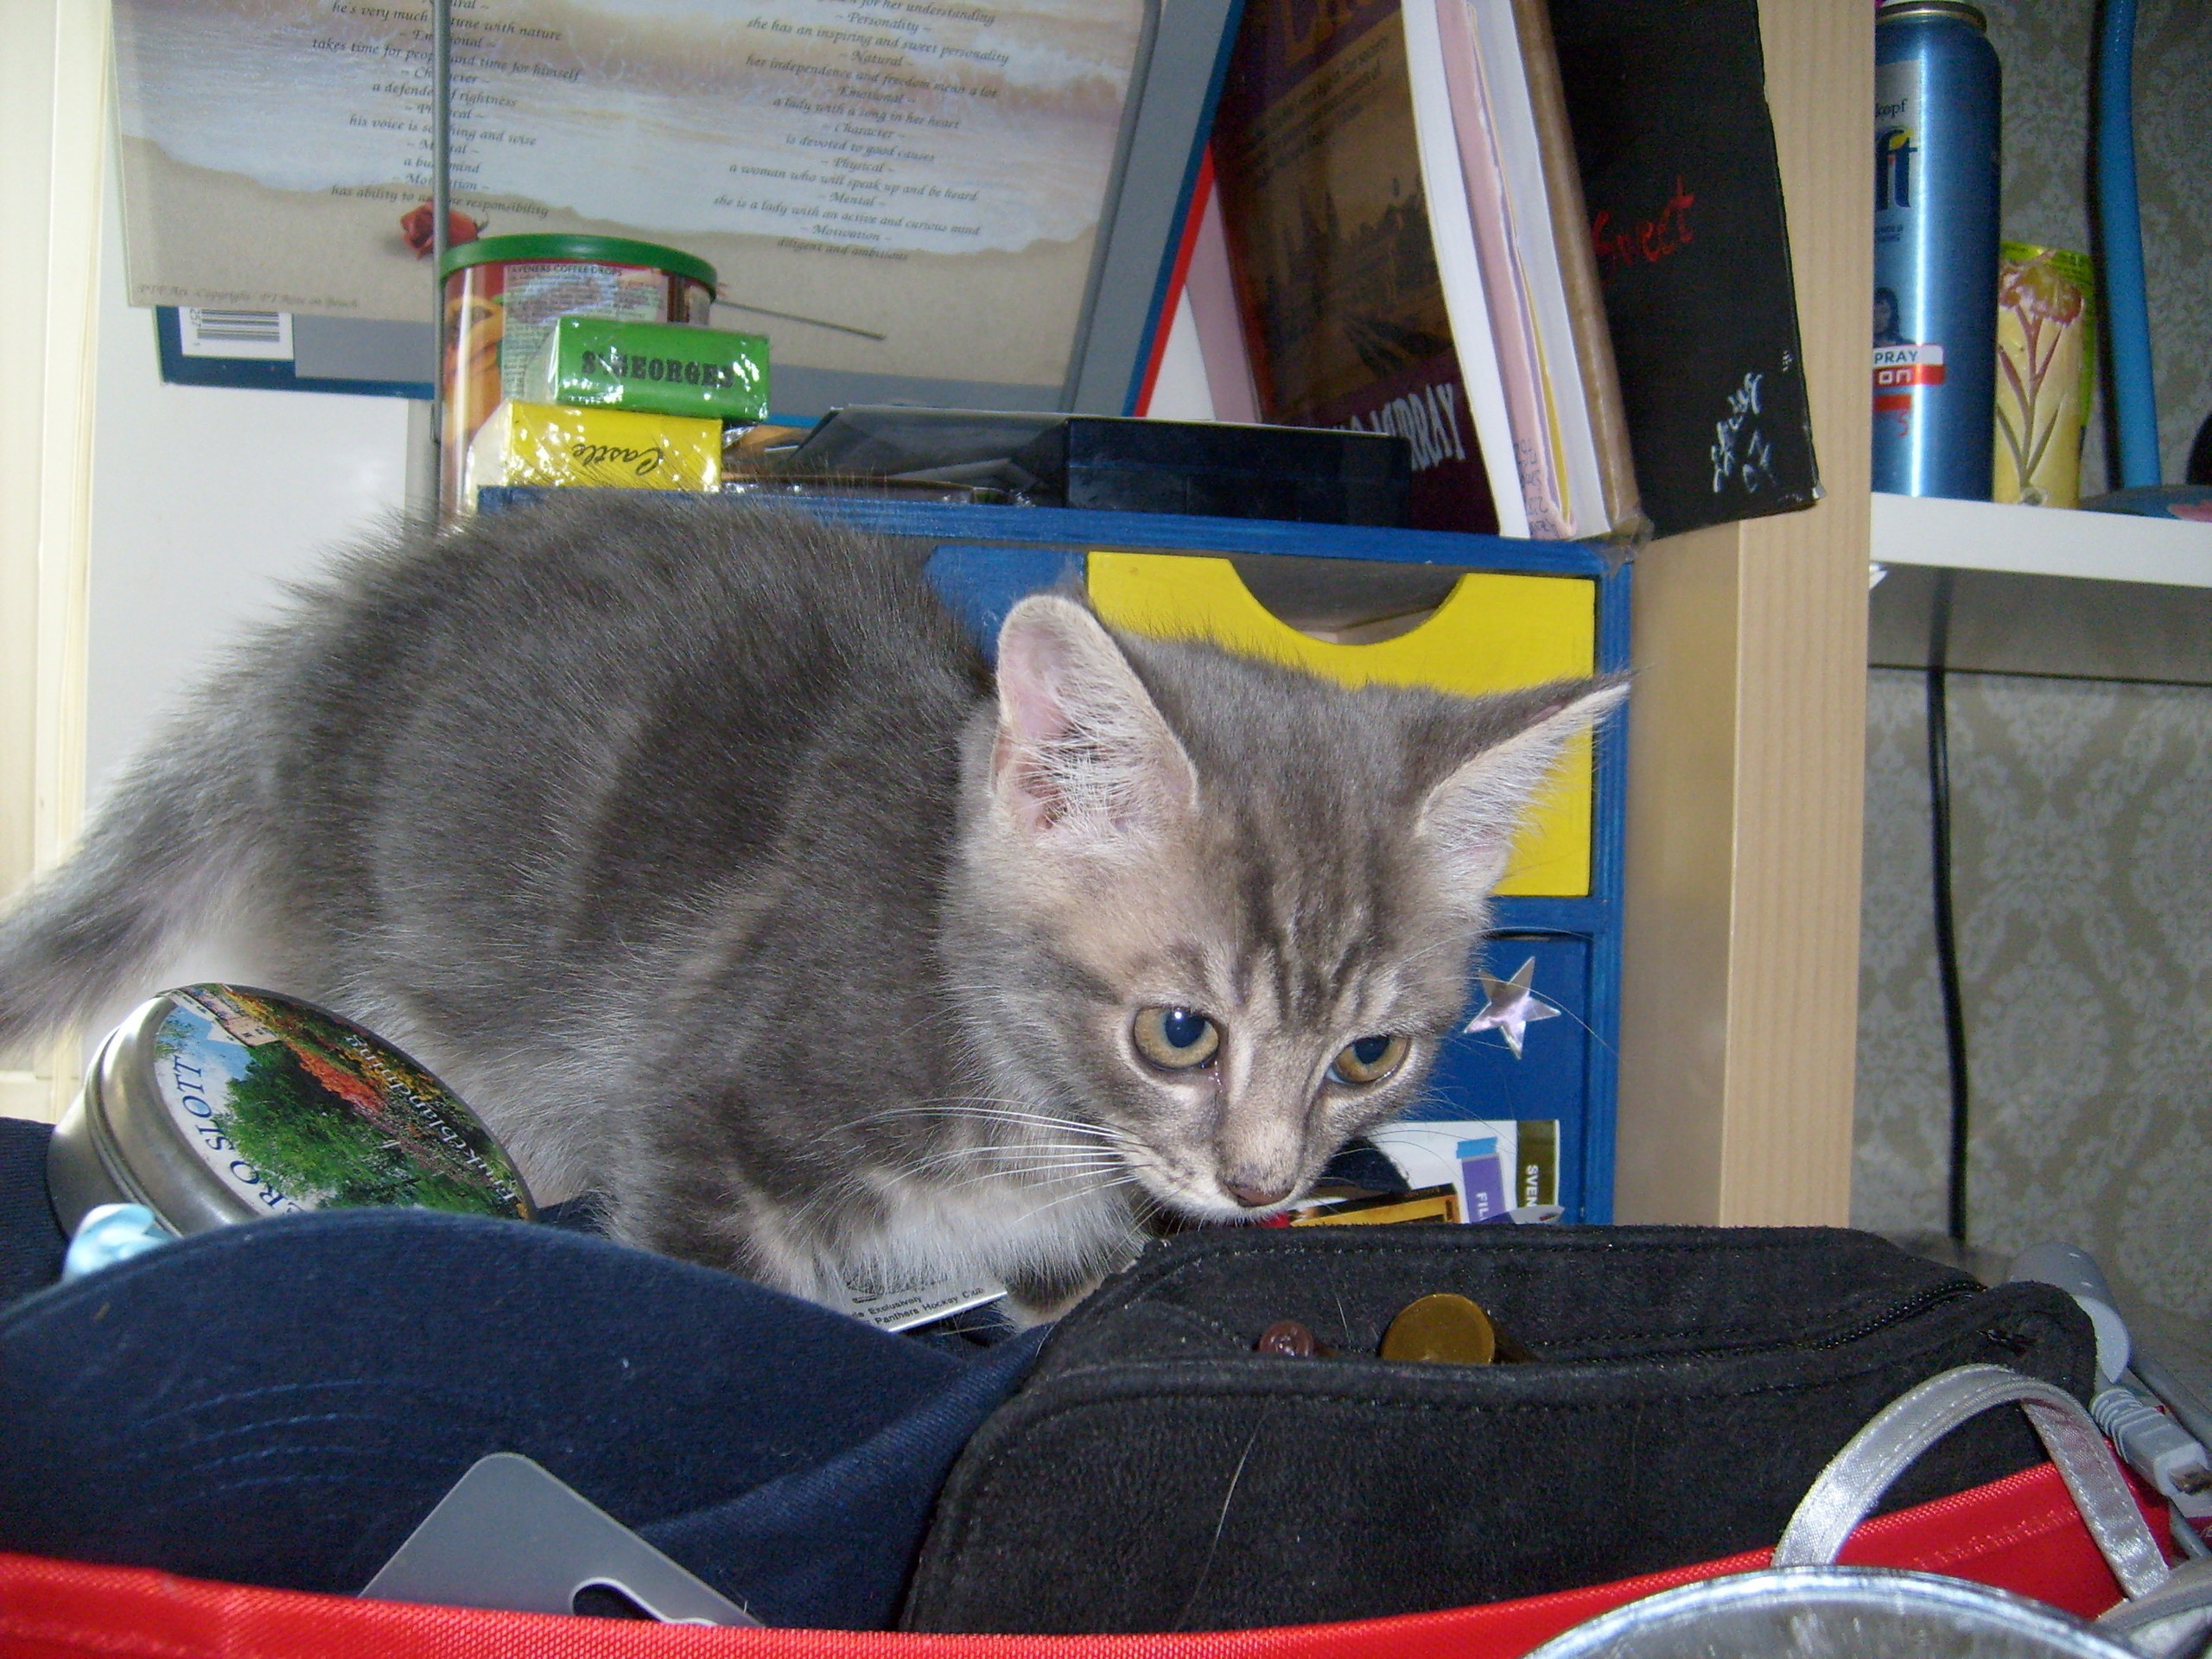 newborn grey tabby kitten